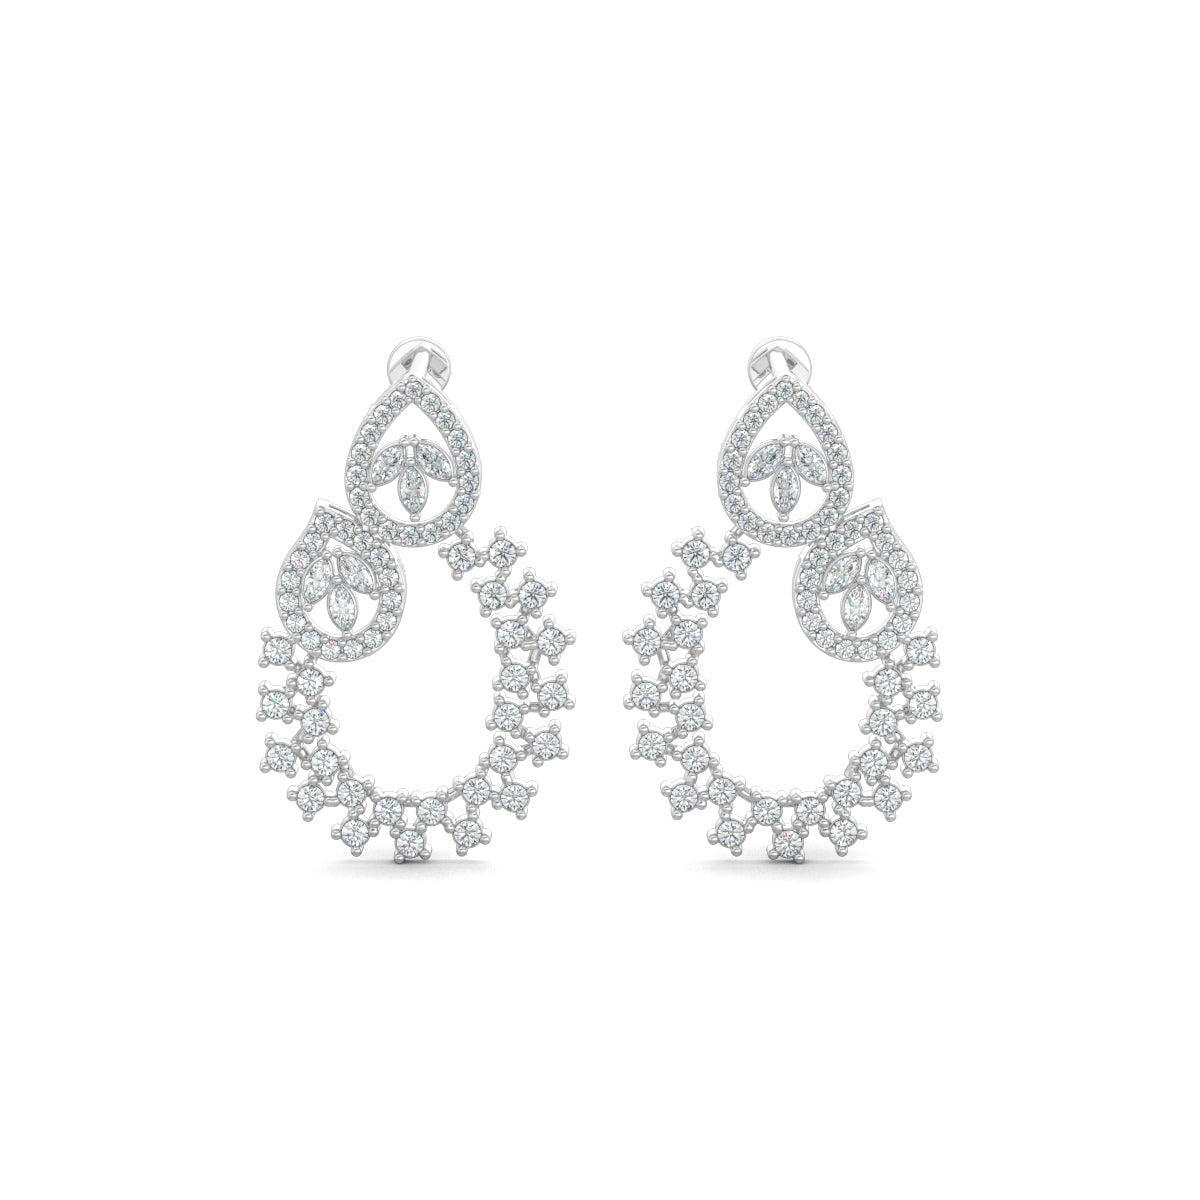 White Gold, Diamond Earrings, Natural diamond earrings, Lab-grown diamond earrings, traditional design earrings, mid-length diamond earrings, pear-shaped diamonds, oval diamond earrings, marquise-cut diamonds, round diamonds, elegant diamond jewelry